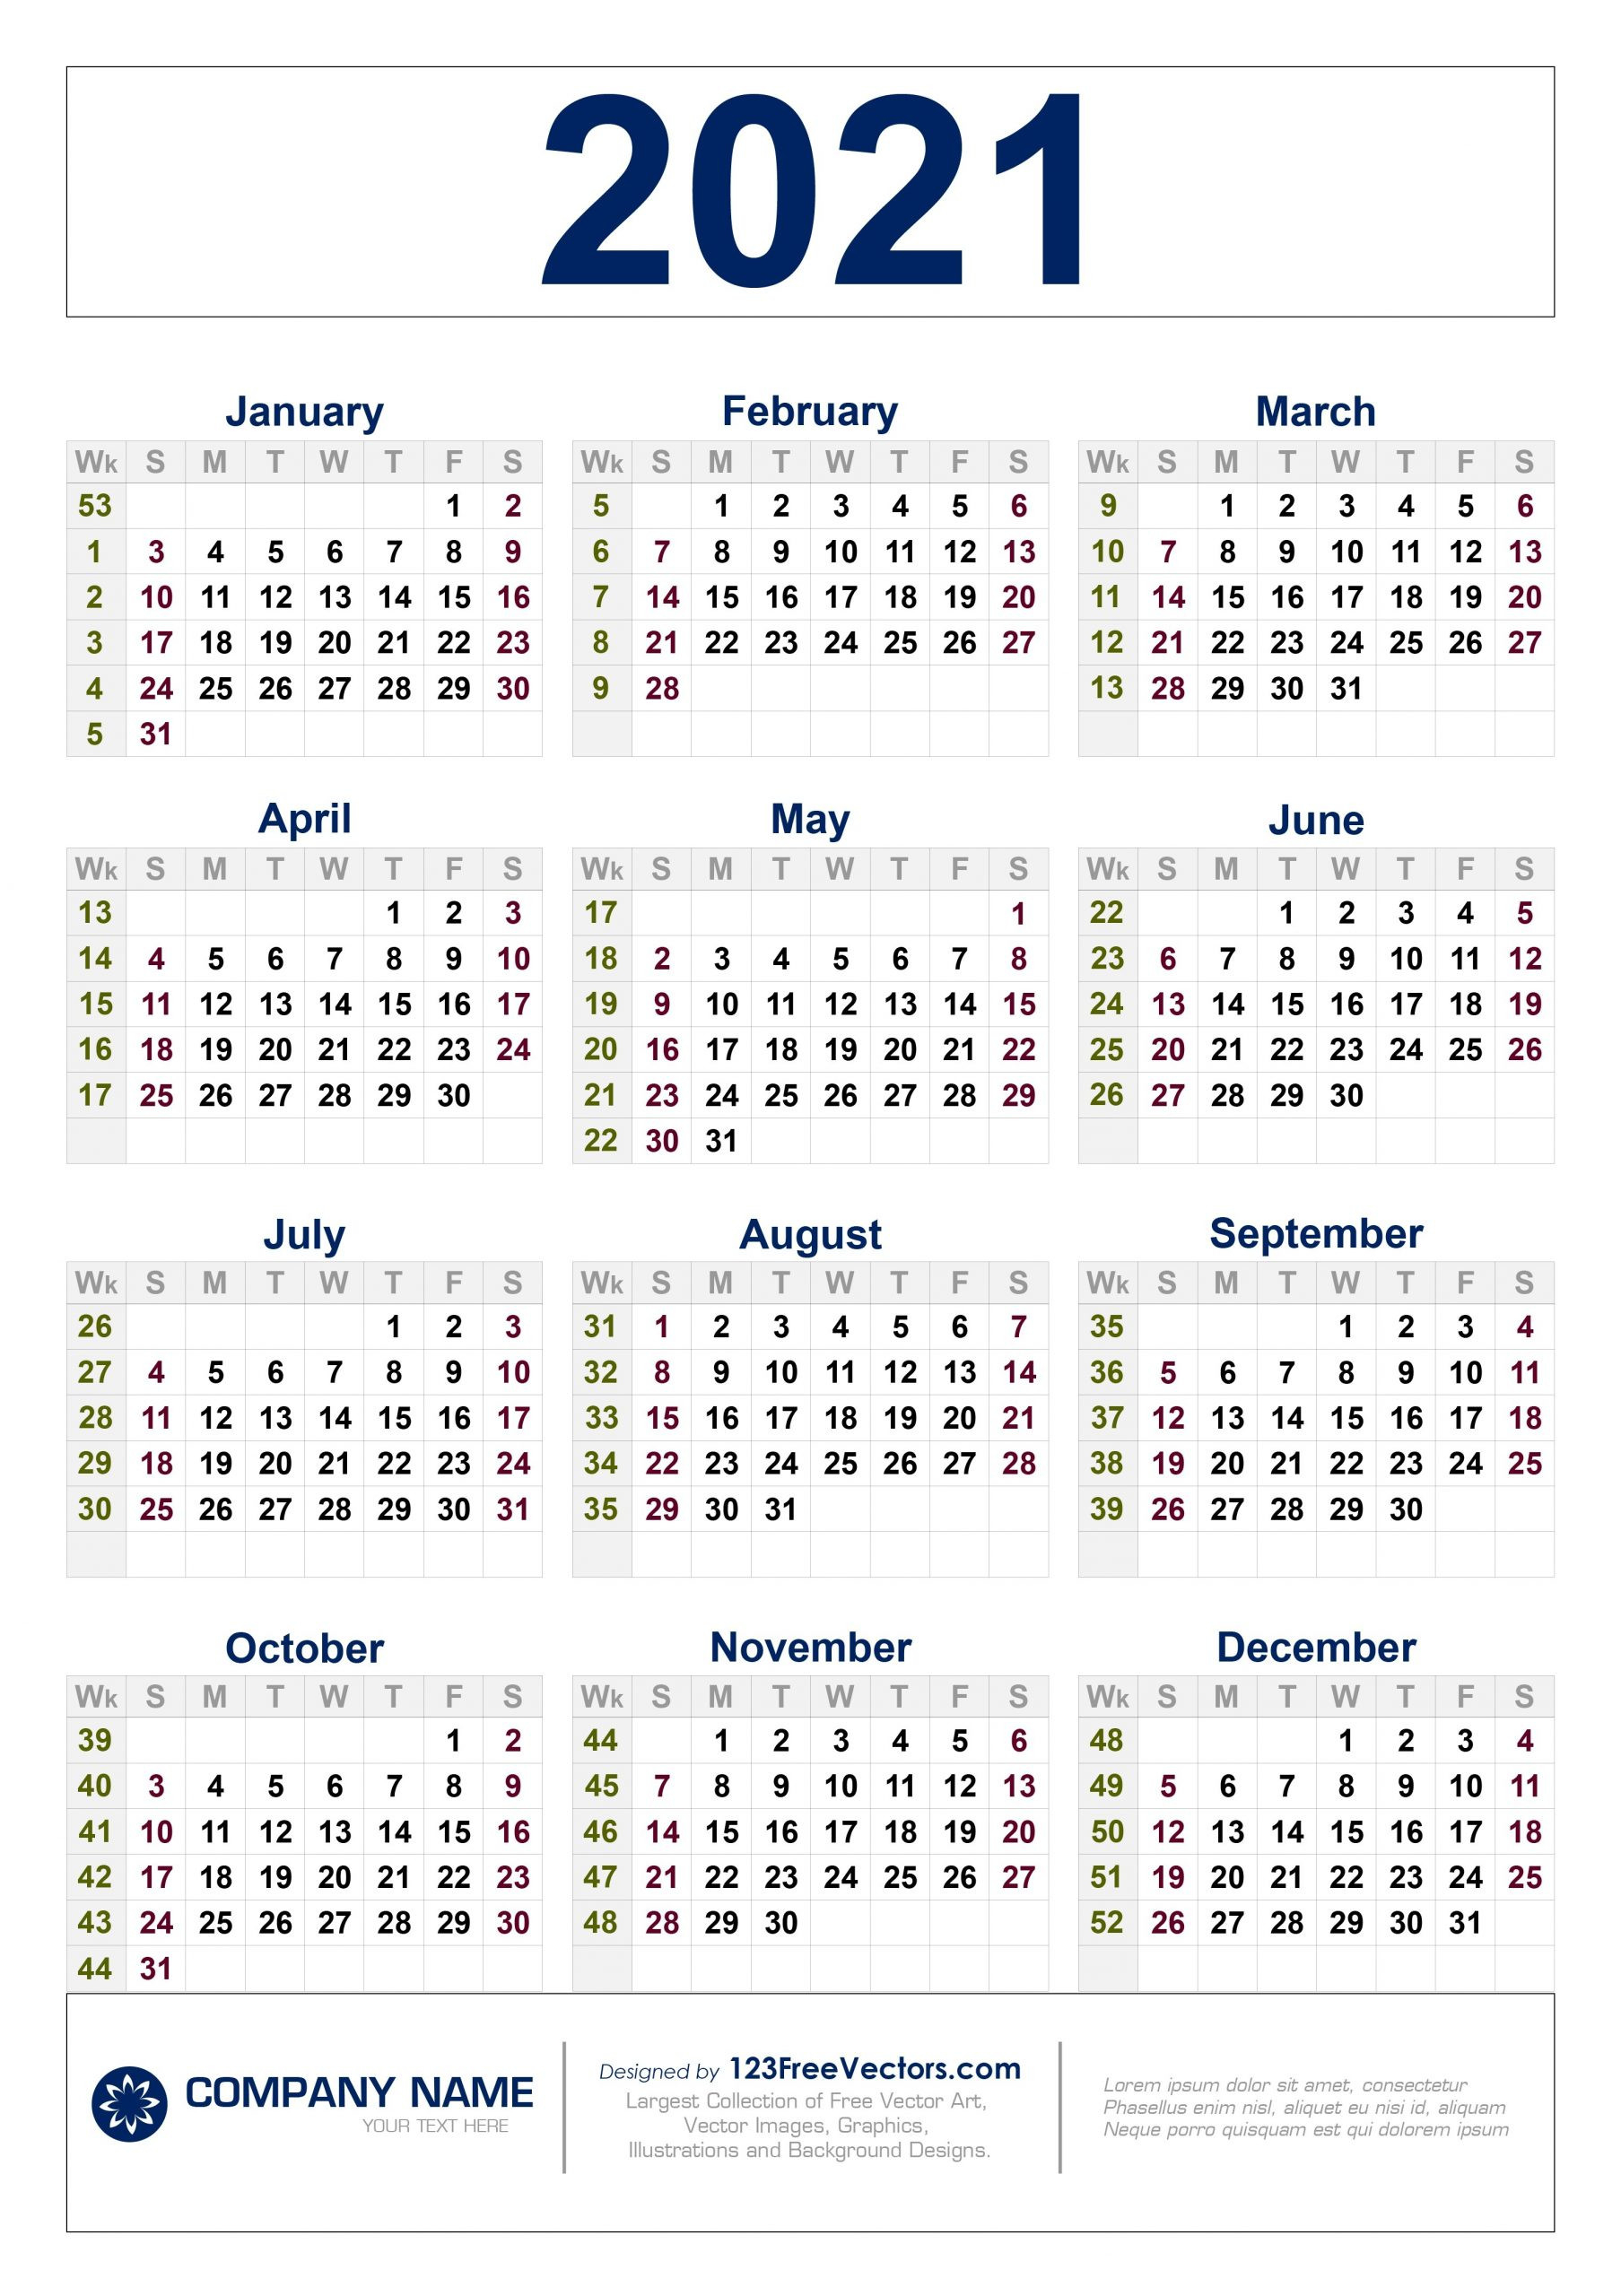 2021 Calendar Weeks Numbered - Template Calendar Design  Free 2021 Liturgical Calendar Umc